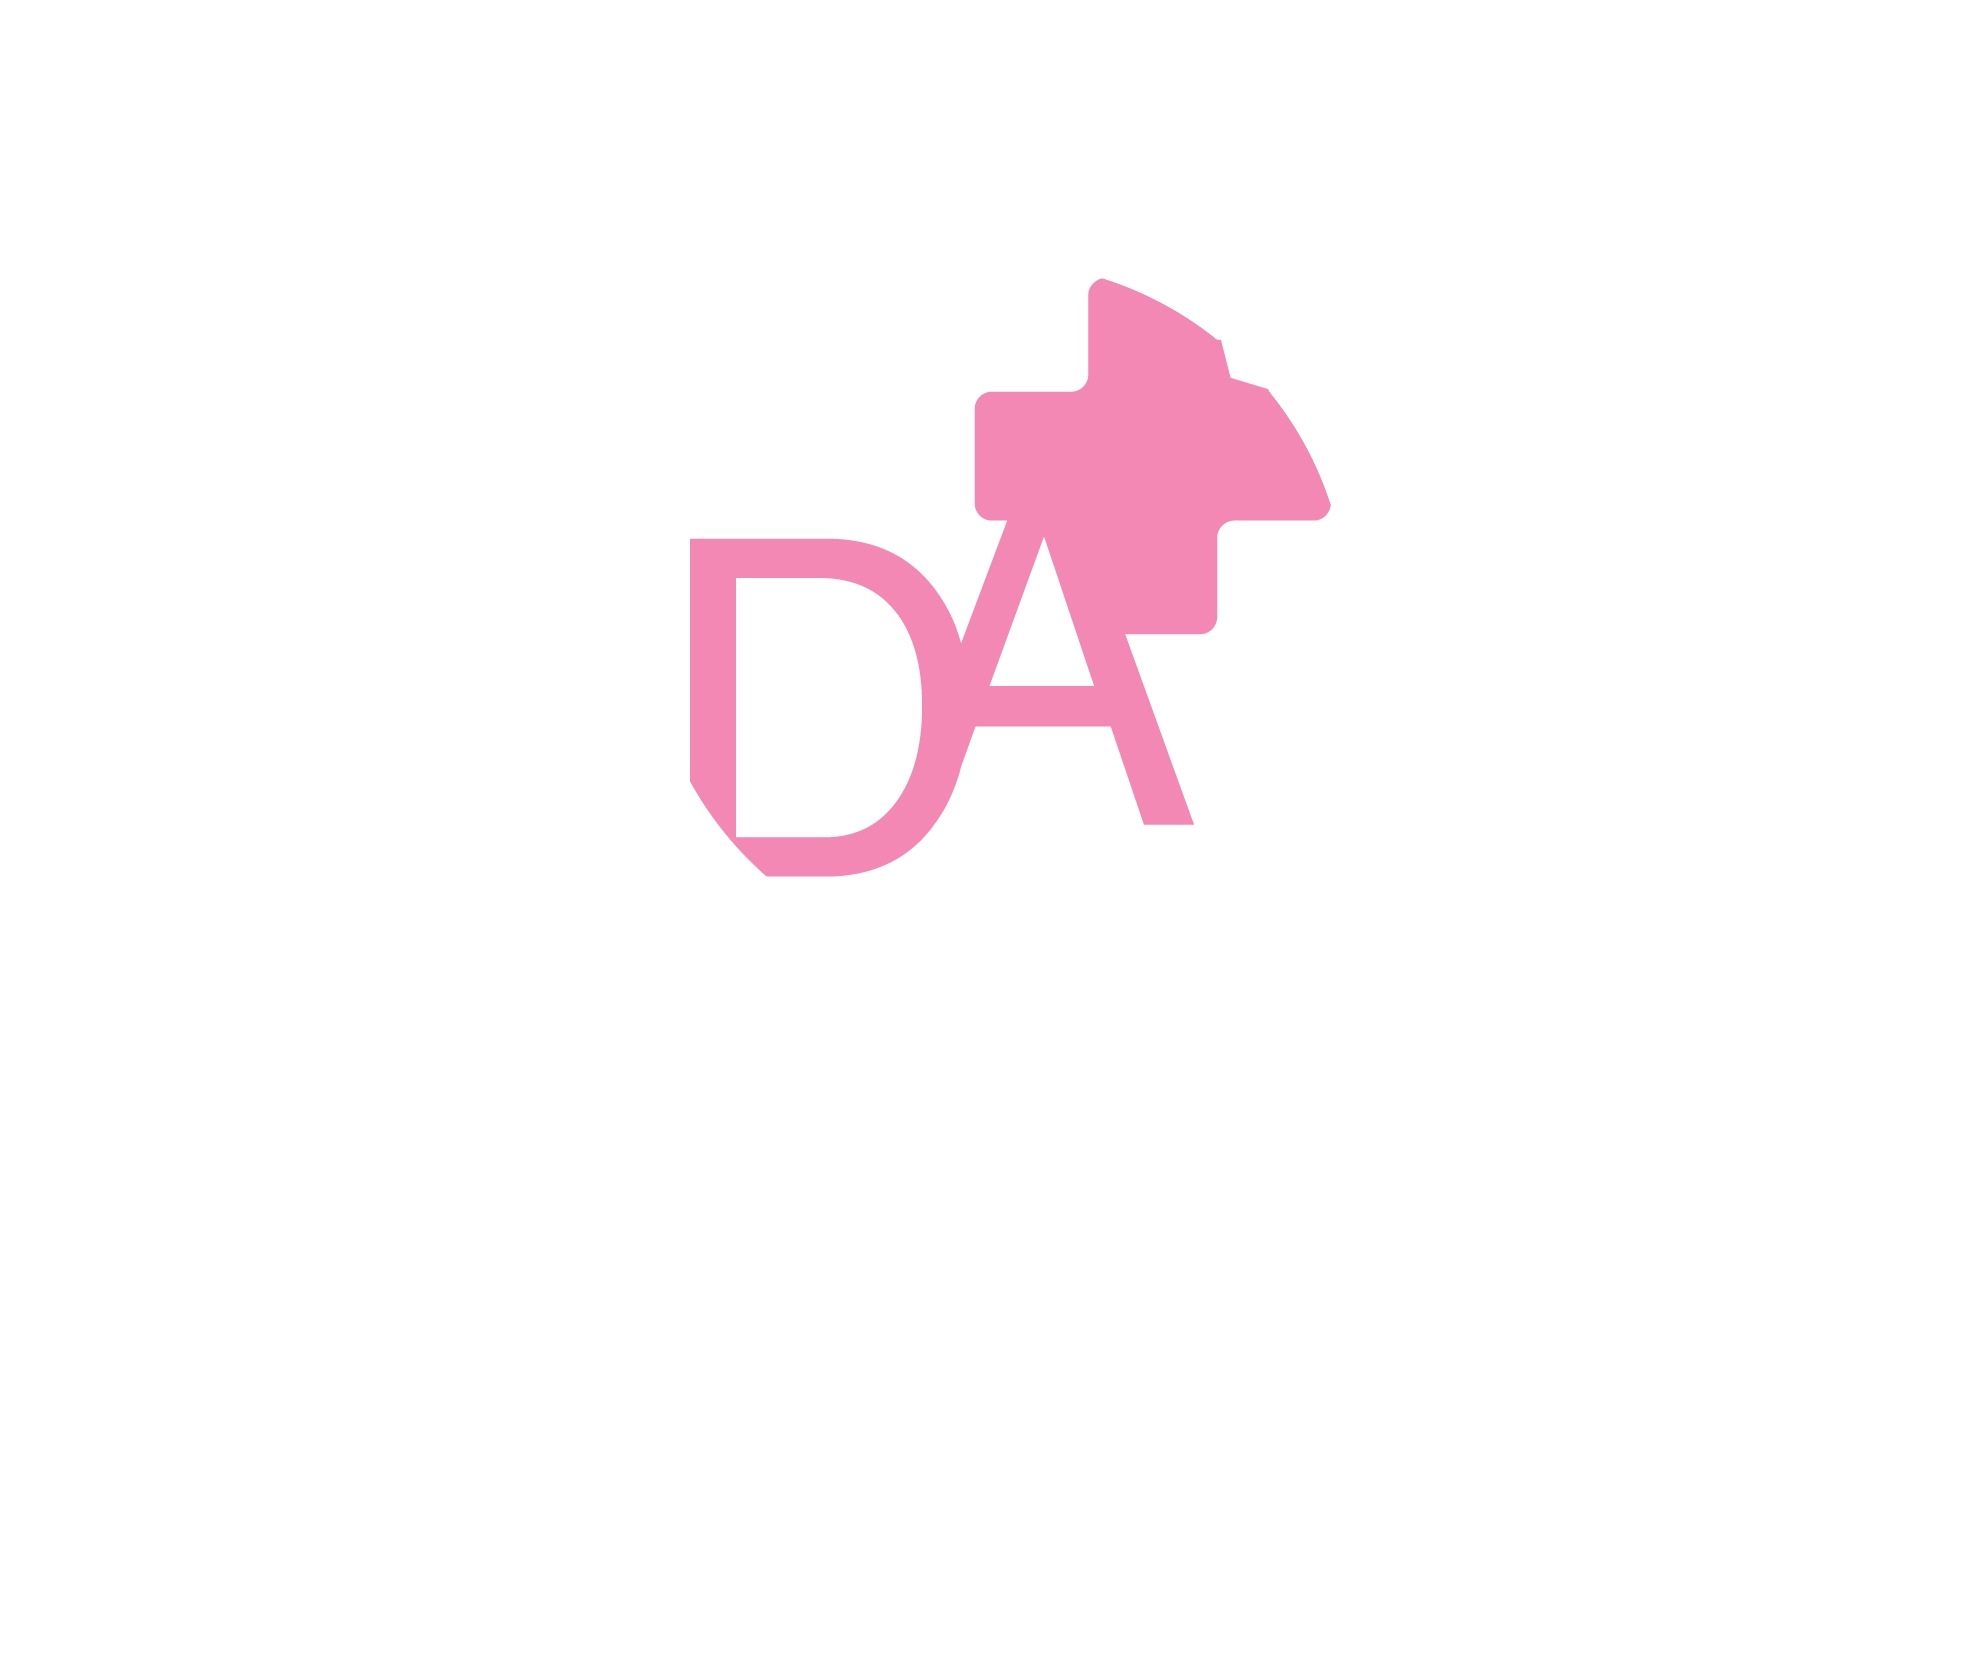 Orienda polyclinic